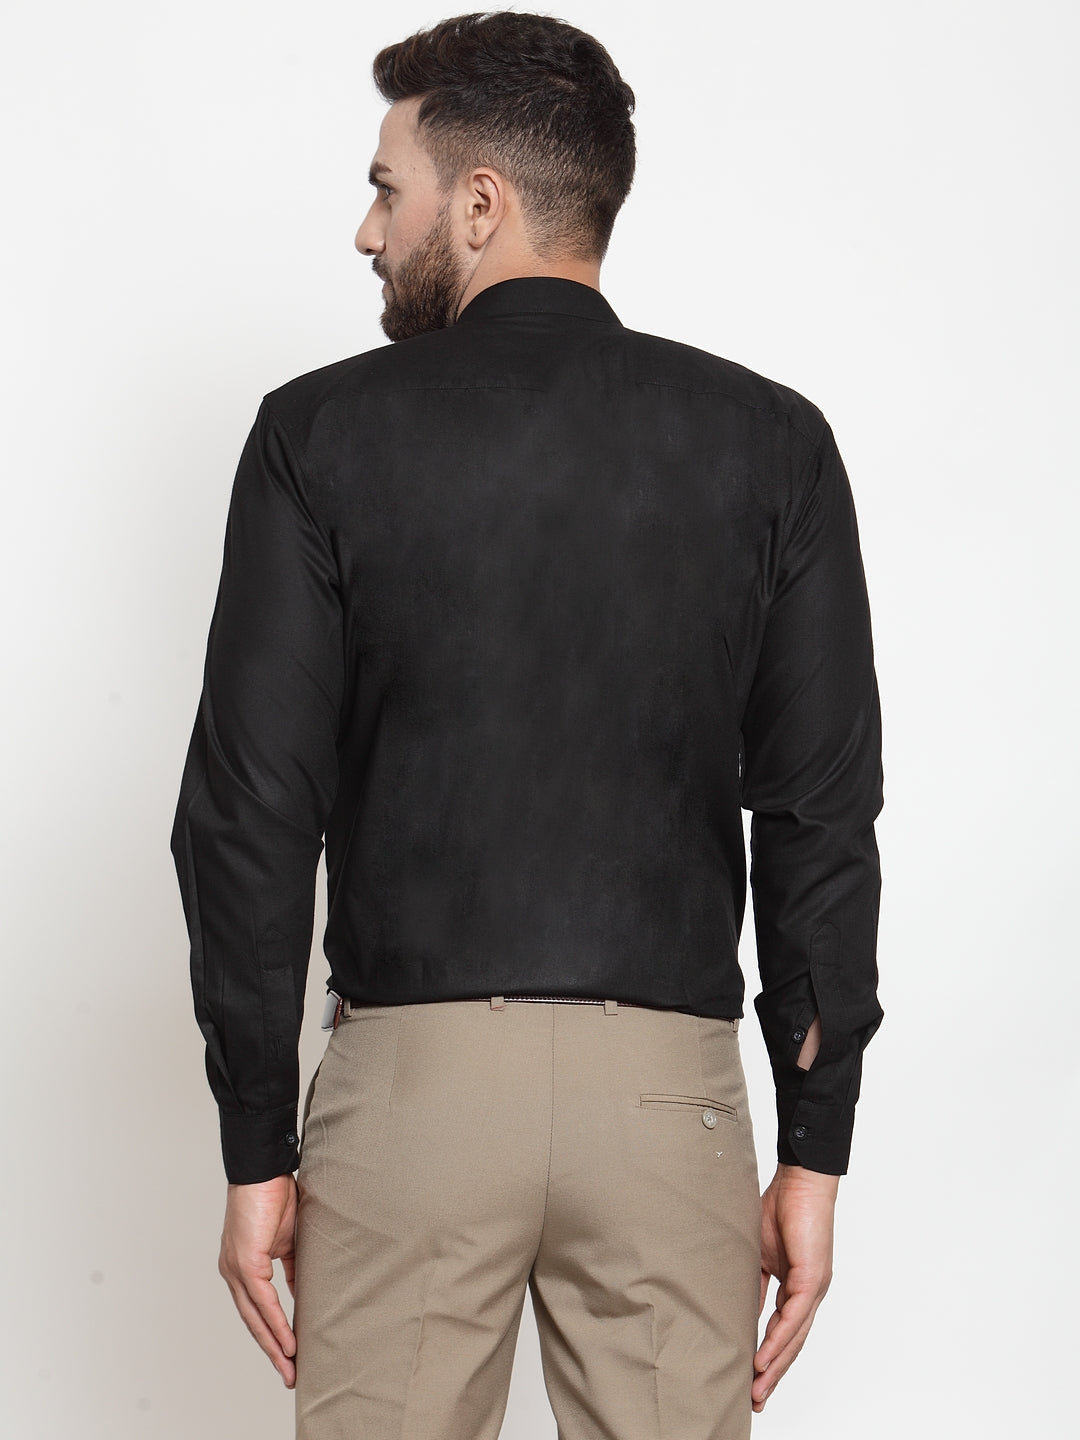 Men's Black Cotton Solid Mandarin Collar Formal Shirts ( SF 726Black ) - Jainish